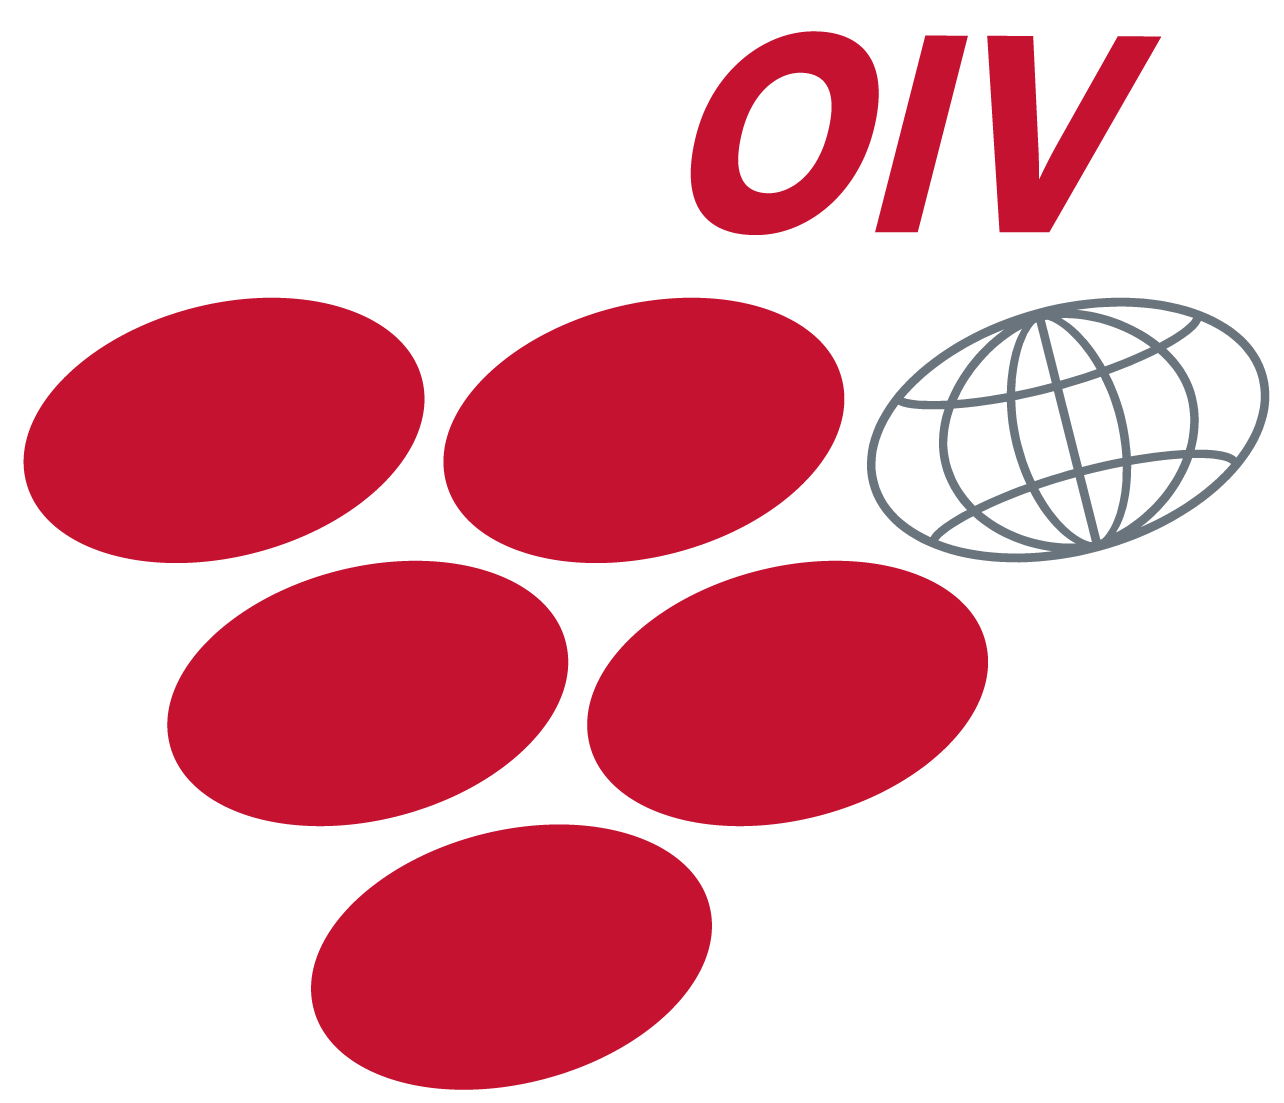 OIV